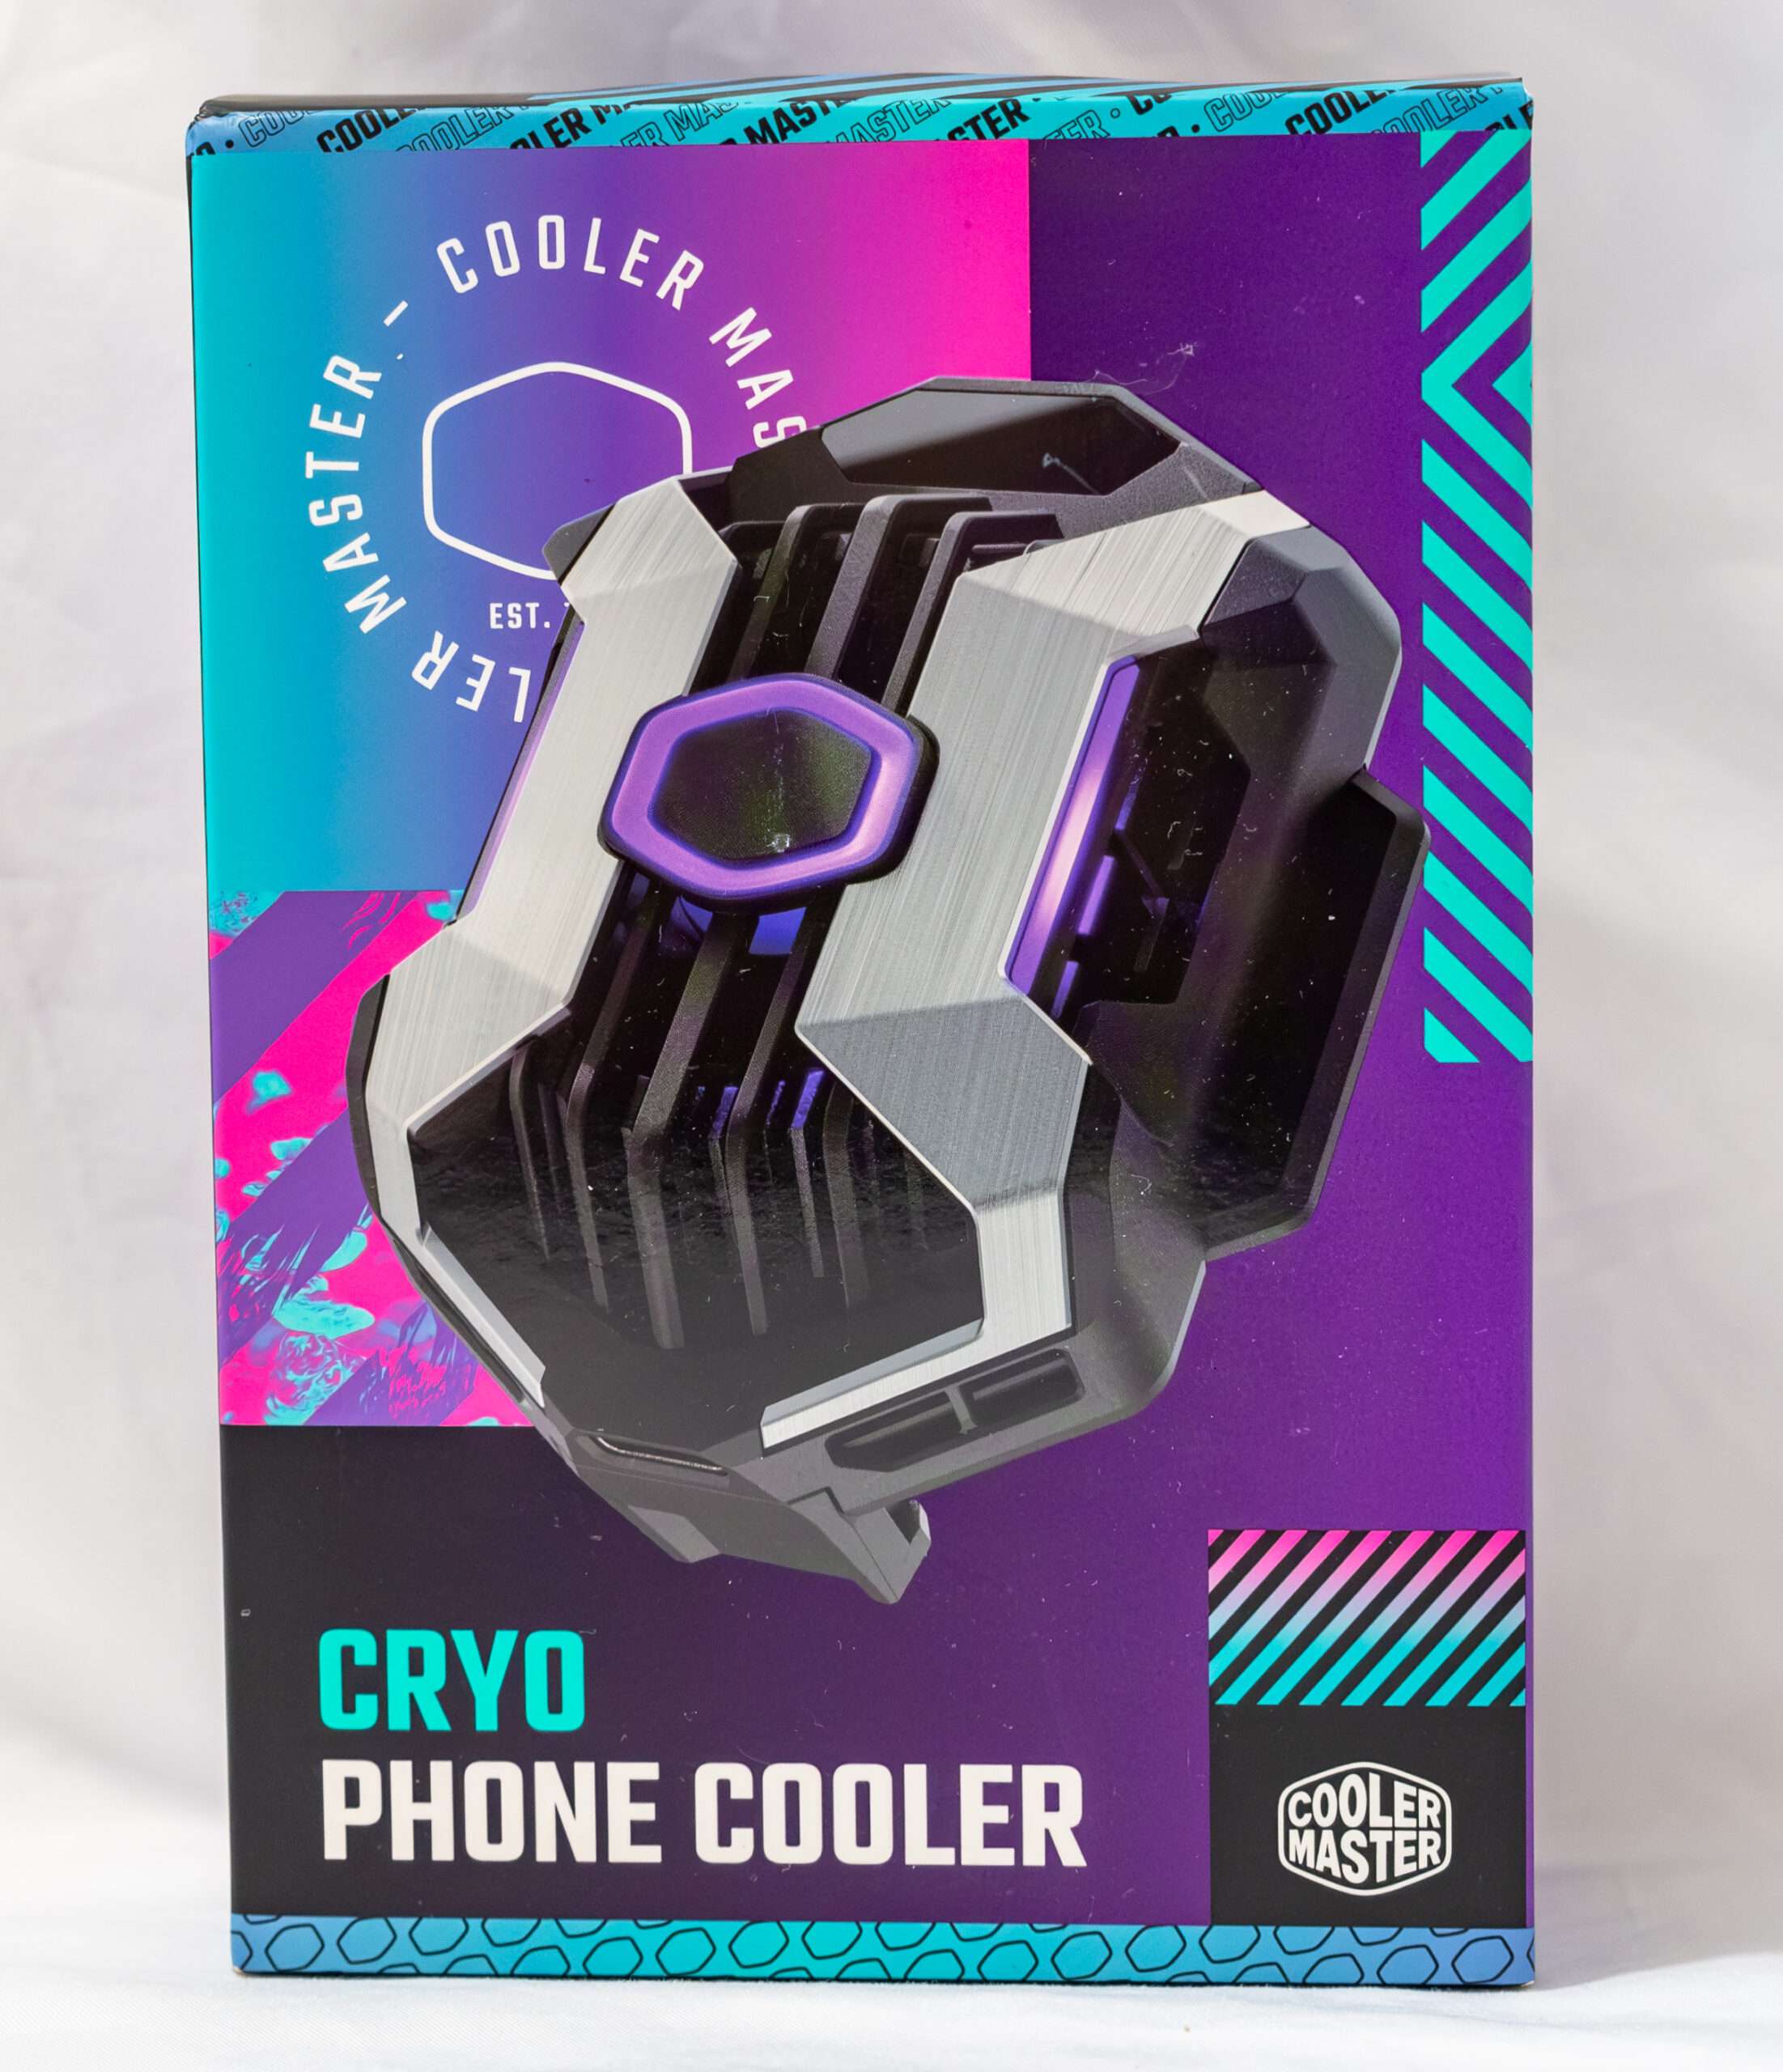 Cooler Master Cryo Phone Cooler